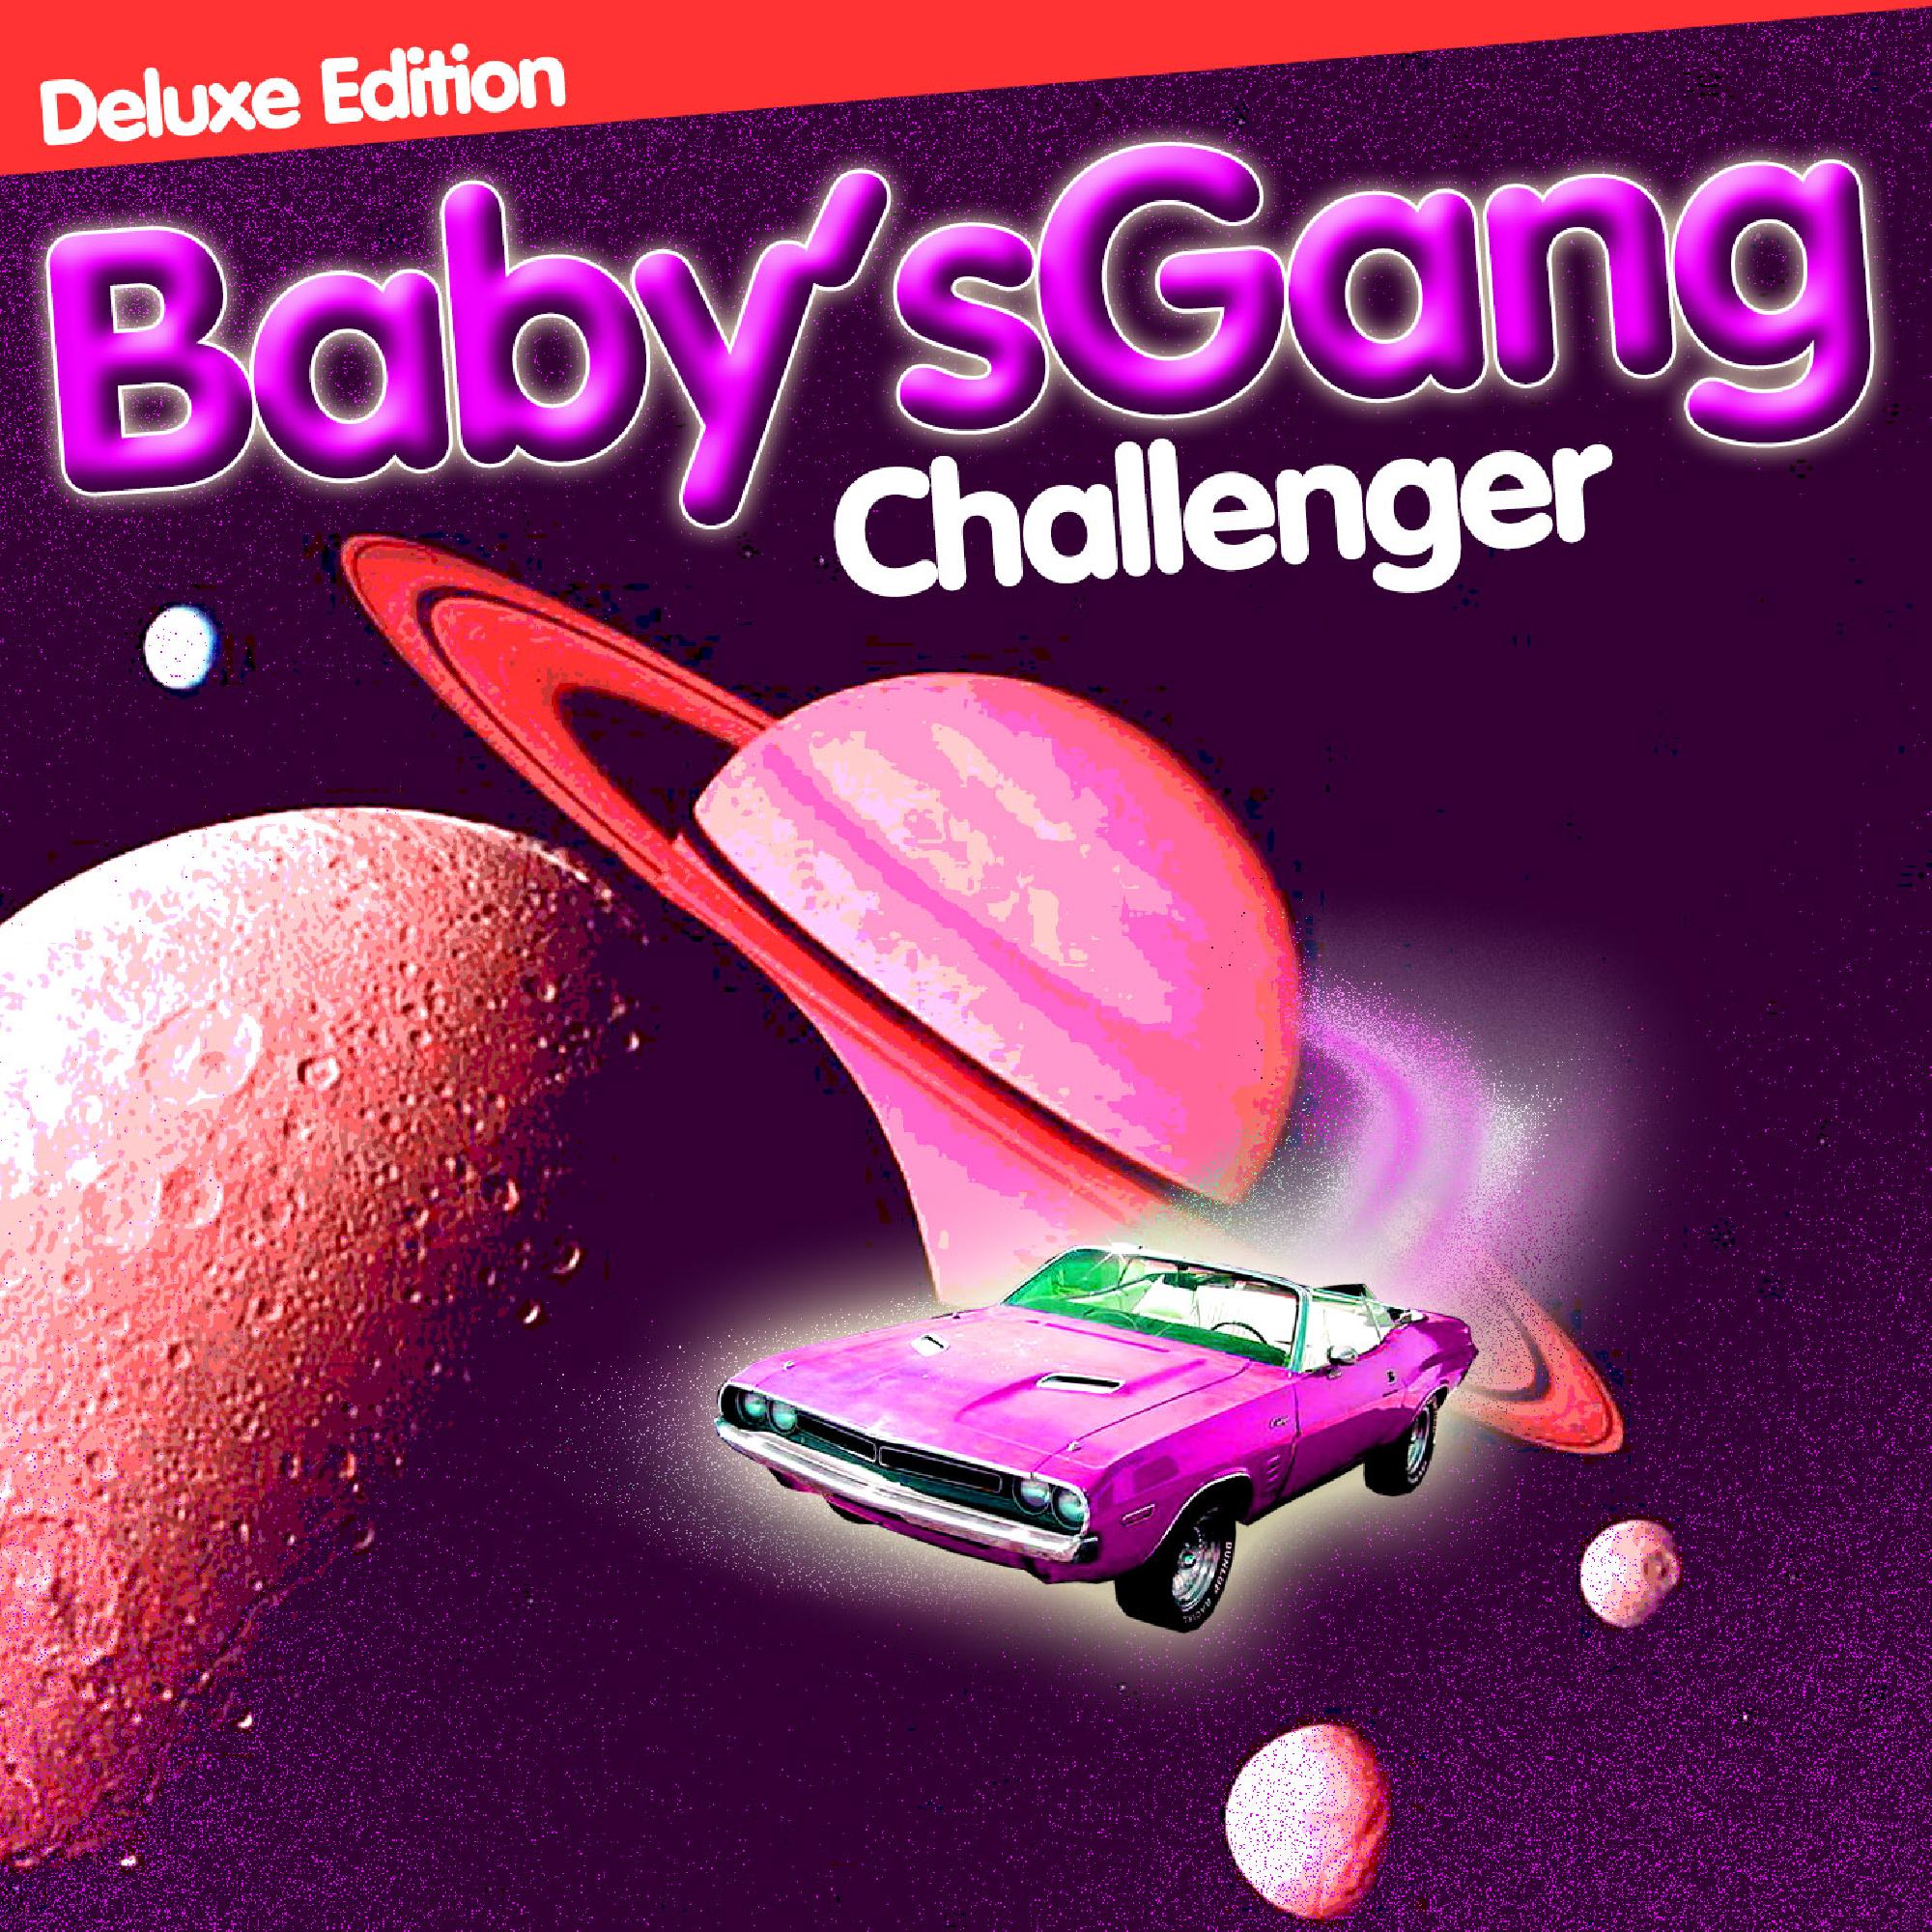 Mentalitè baby gang. Baby's gang - Challenger (1985) CD. Baby s gang Challenger. Babys gang Challenger винил. Baby s gang пластинка.